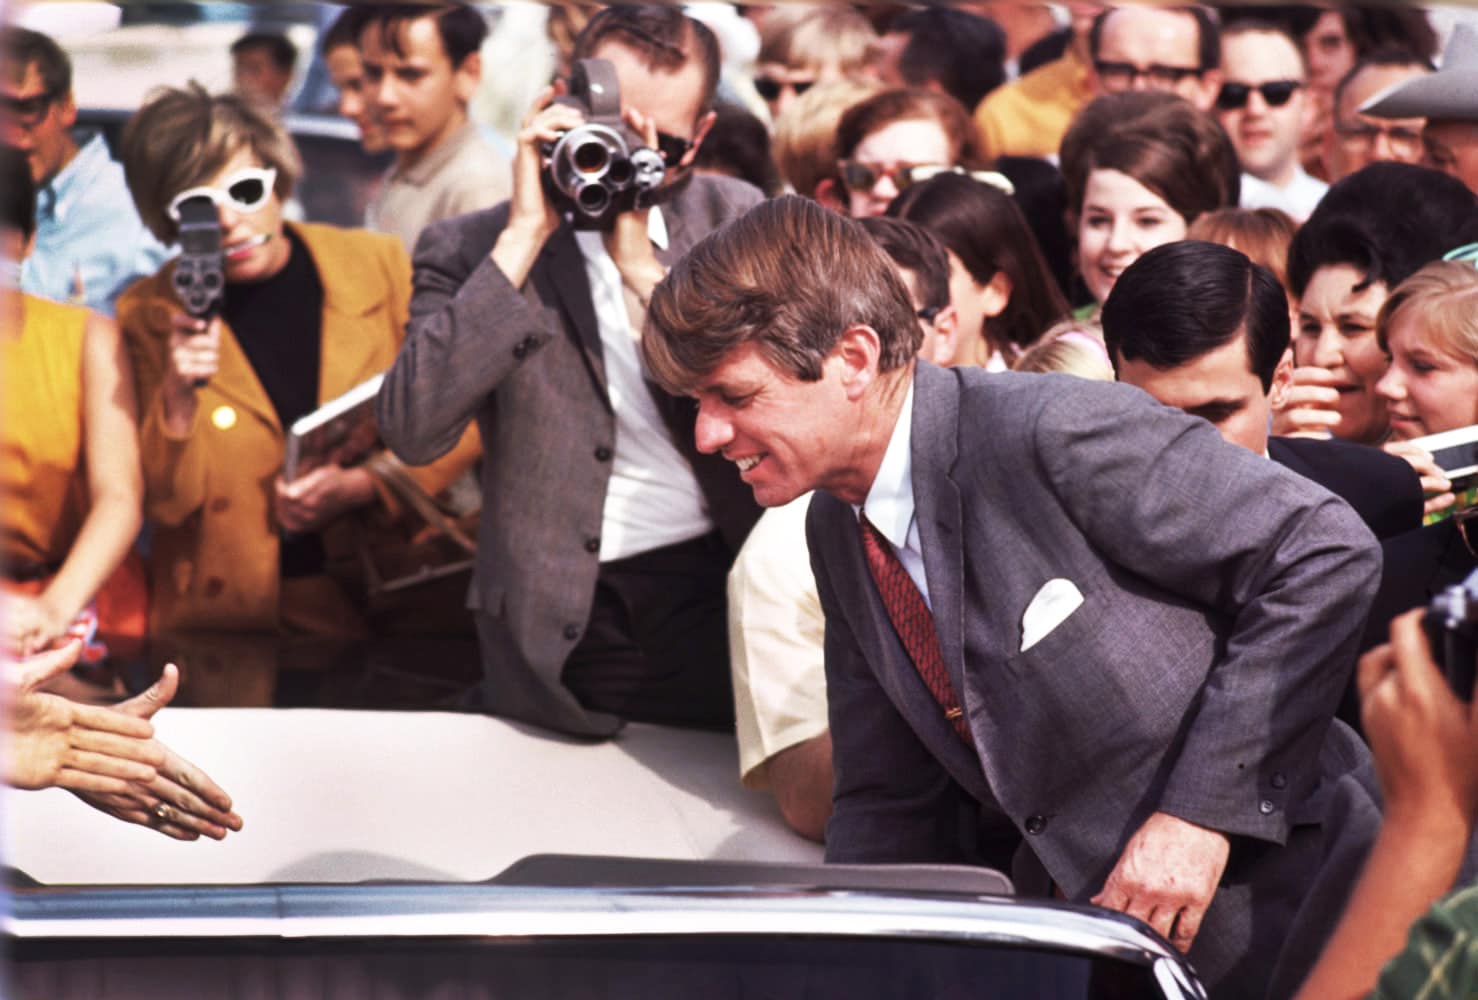 Robert Kennedy by car in Phoenix Arizona amist a crowd including many journalists